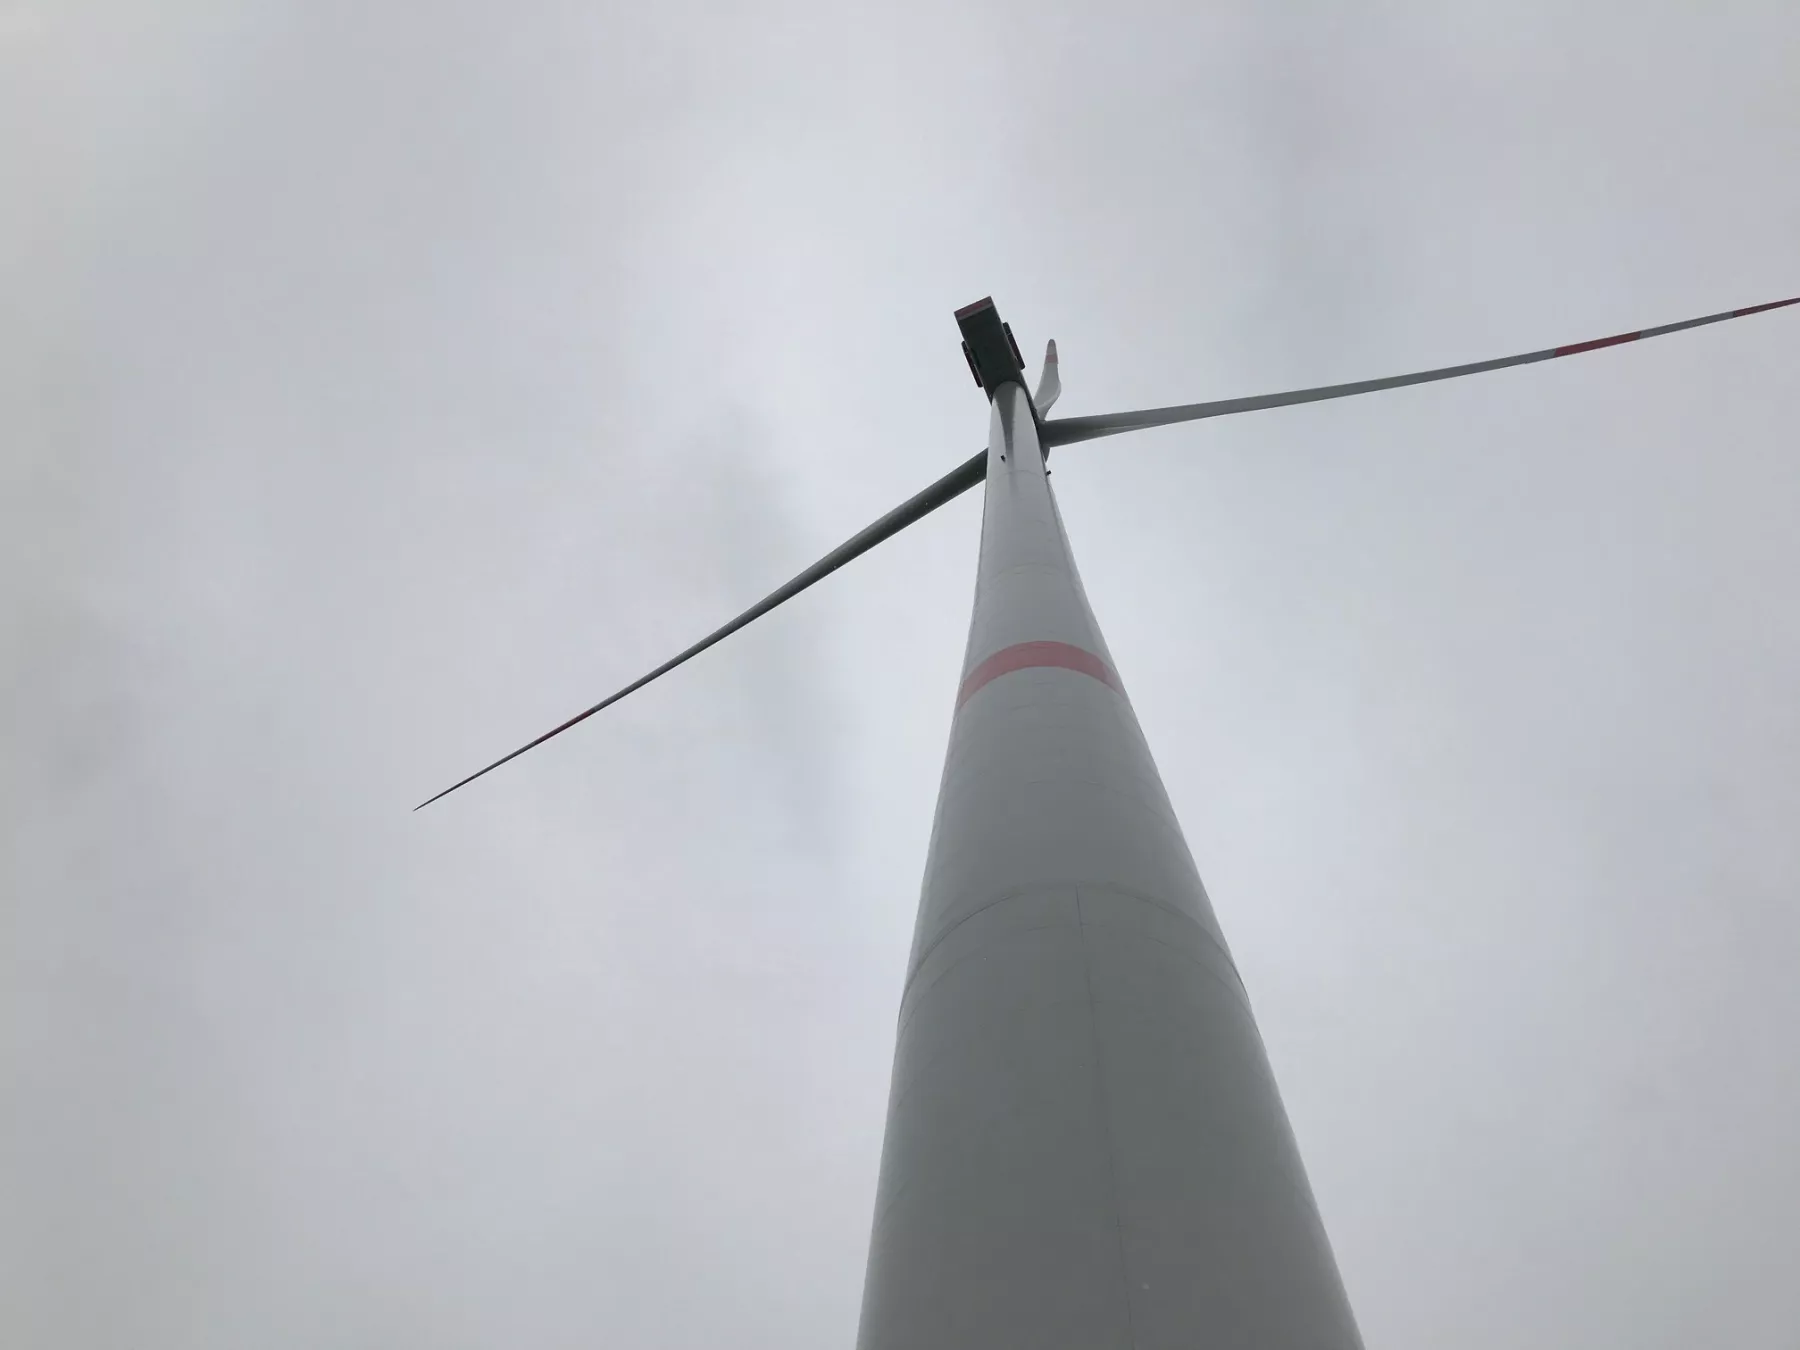 Windparks in Osterburg